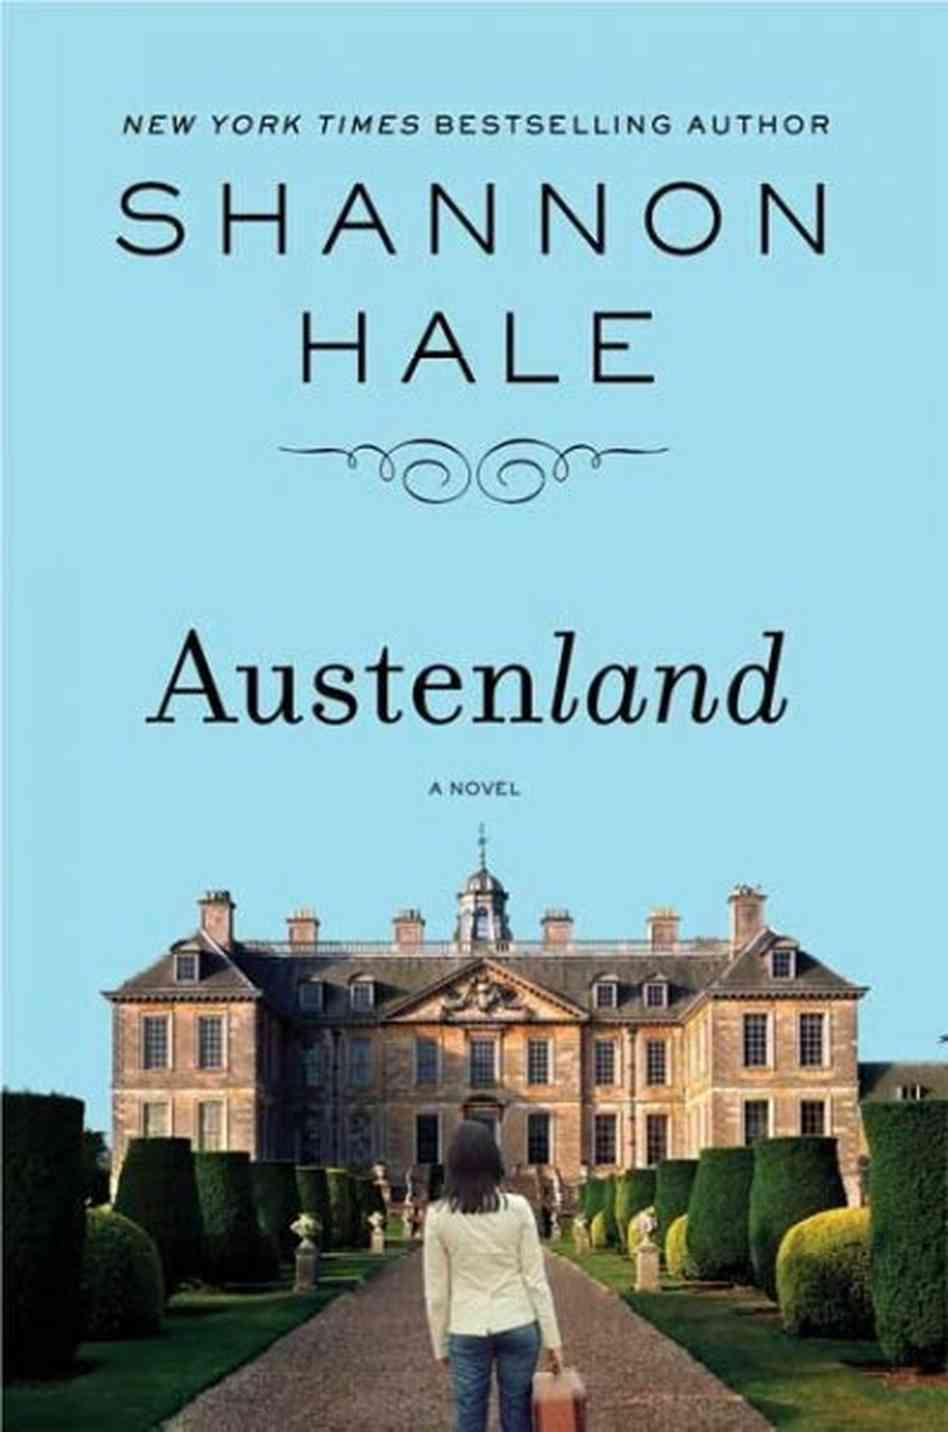 Austenland, the Novel: A Review - JaneAusten.co.uk